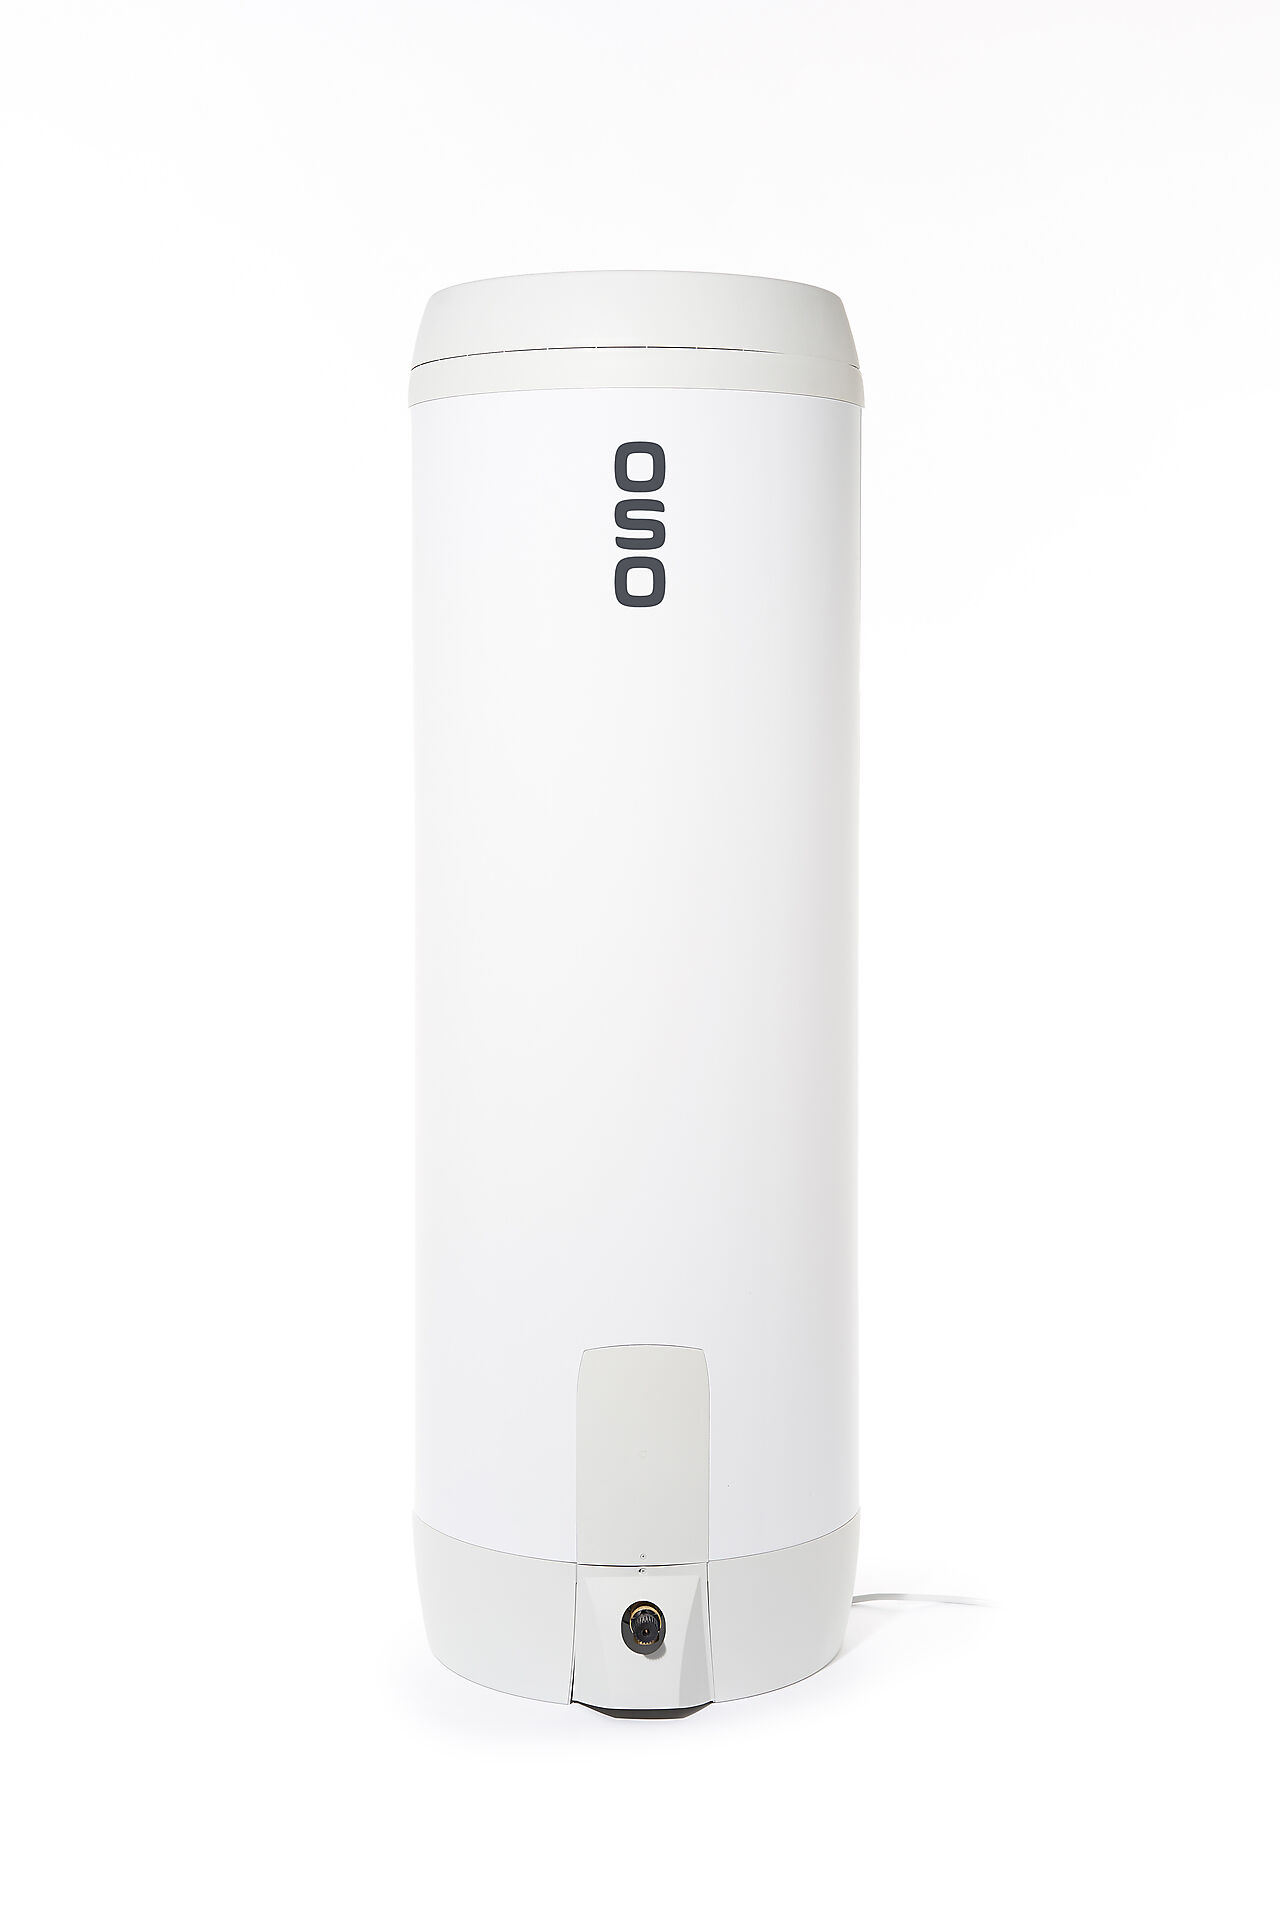 Oso Hotwater Saga S Charge 300 - Boligbereder med smartstyring - 3kW / 1x230V 1